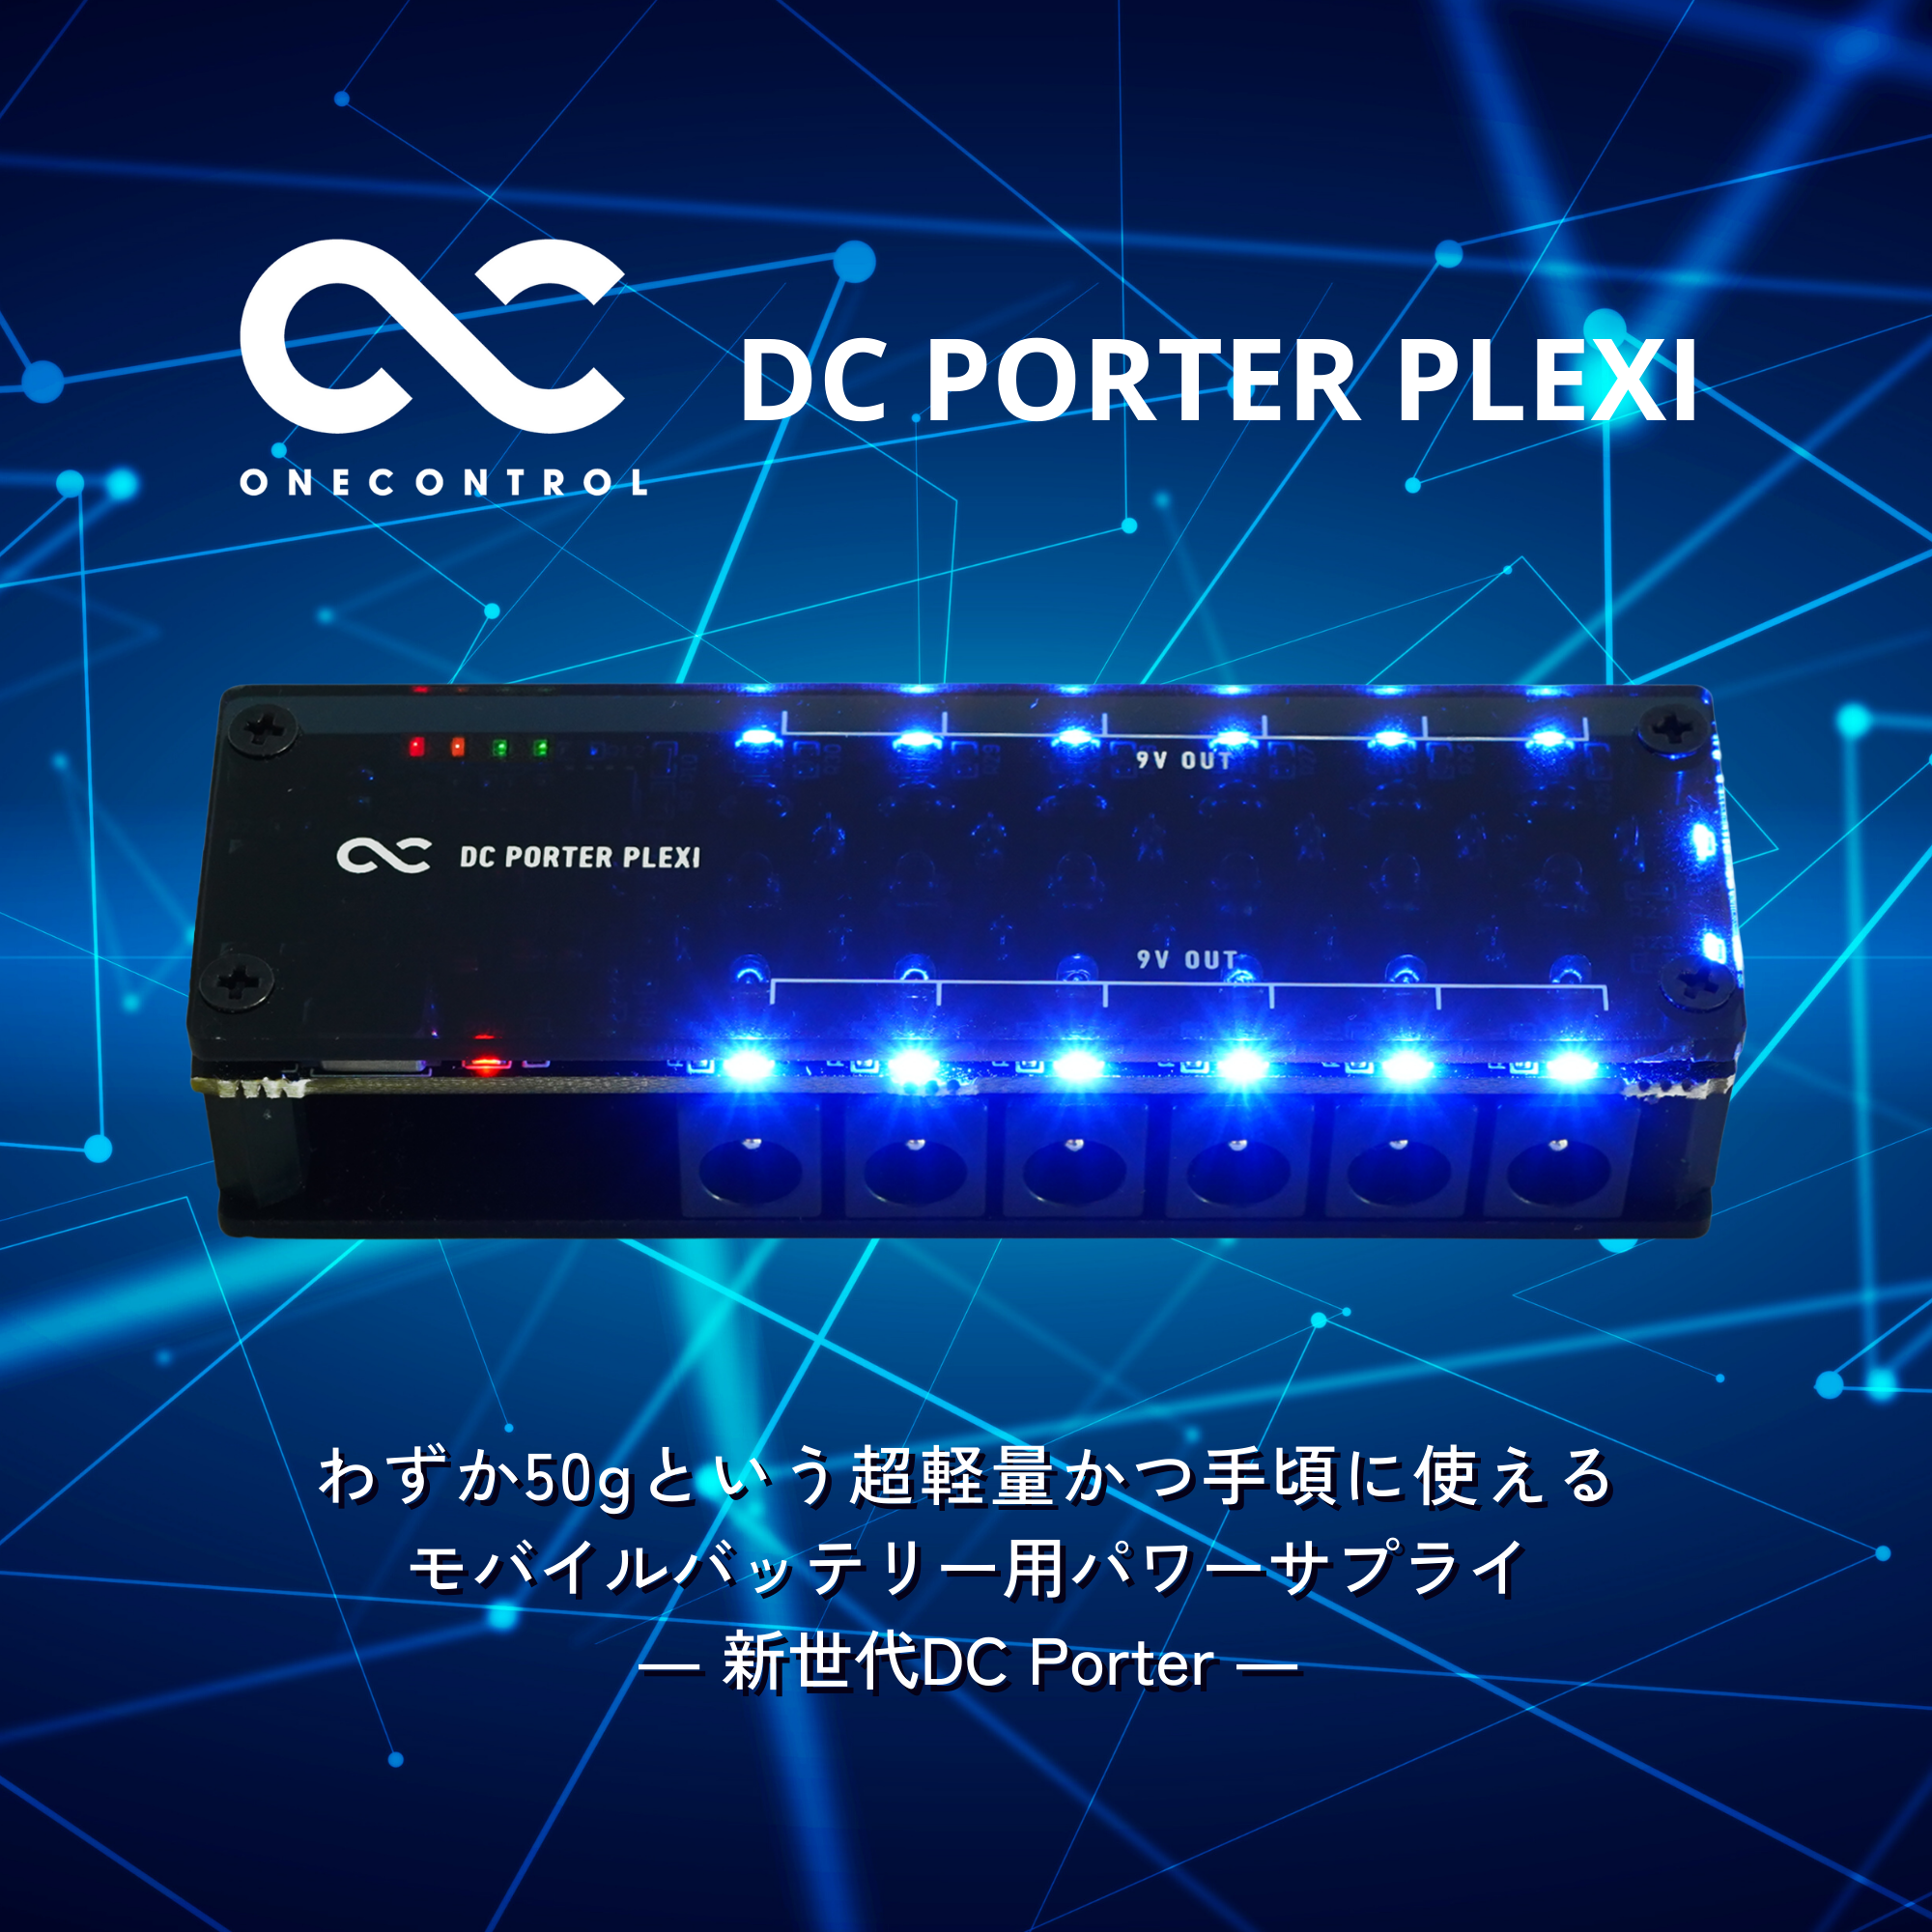 One Control DC Porter モバイルバッテリー USBケーブル付